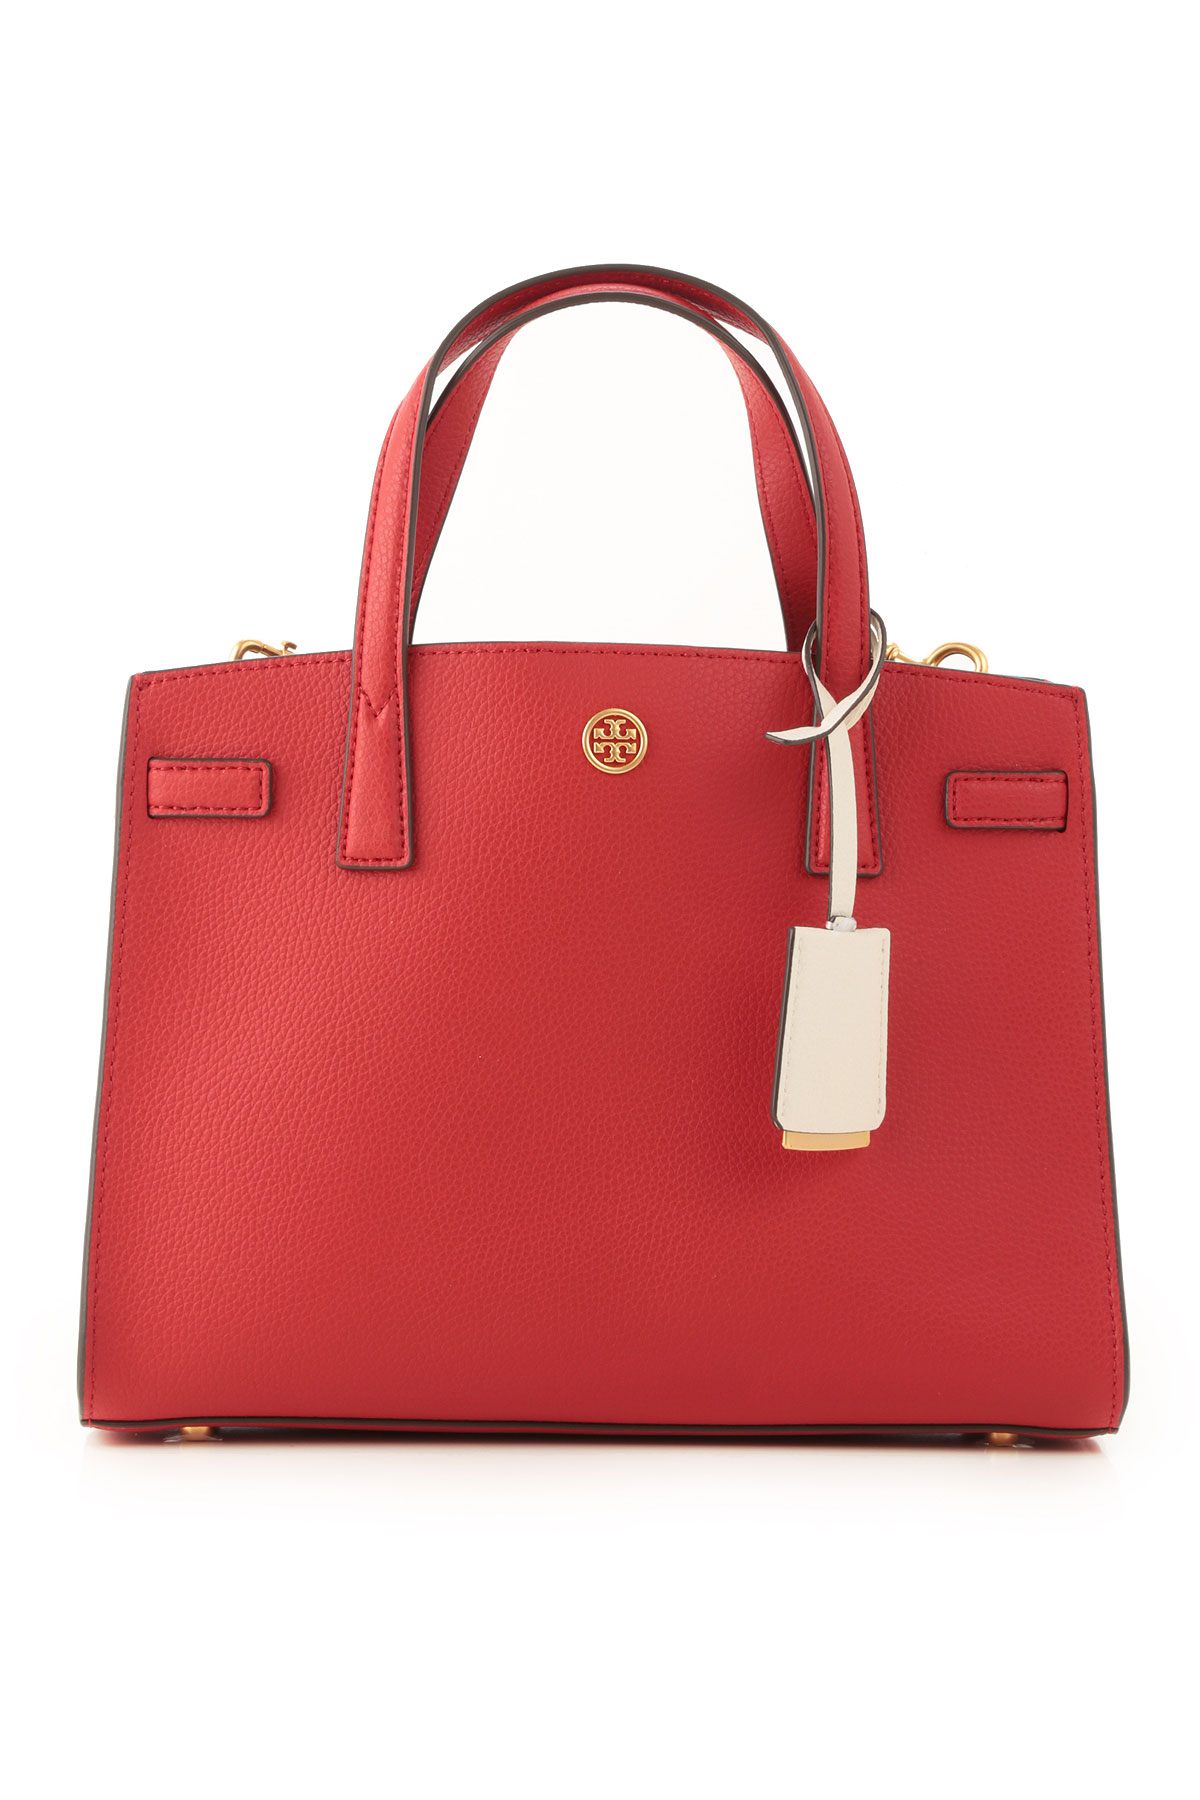 Handbags Tory Burch, Style code 73625610